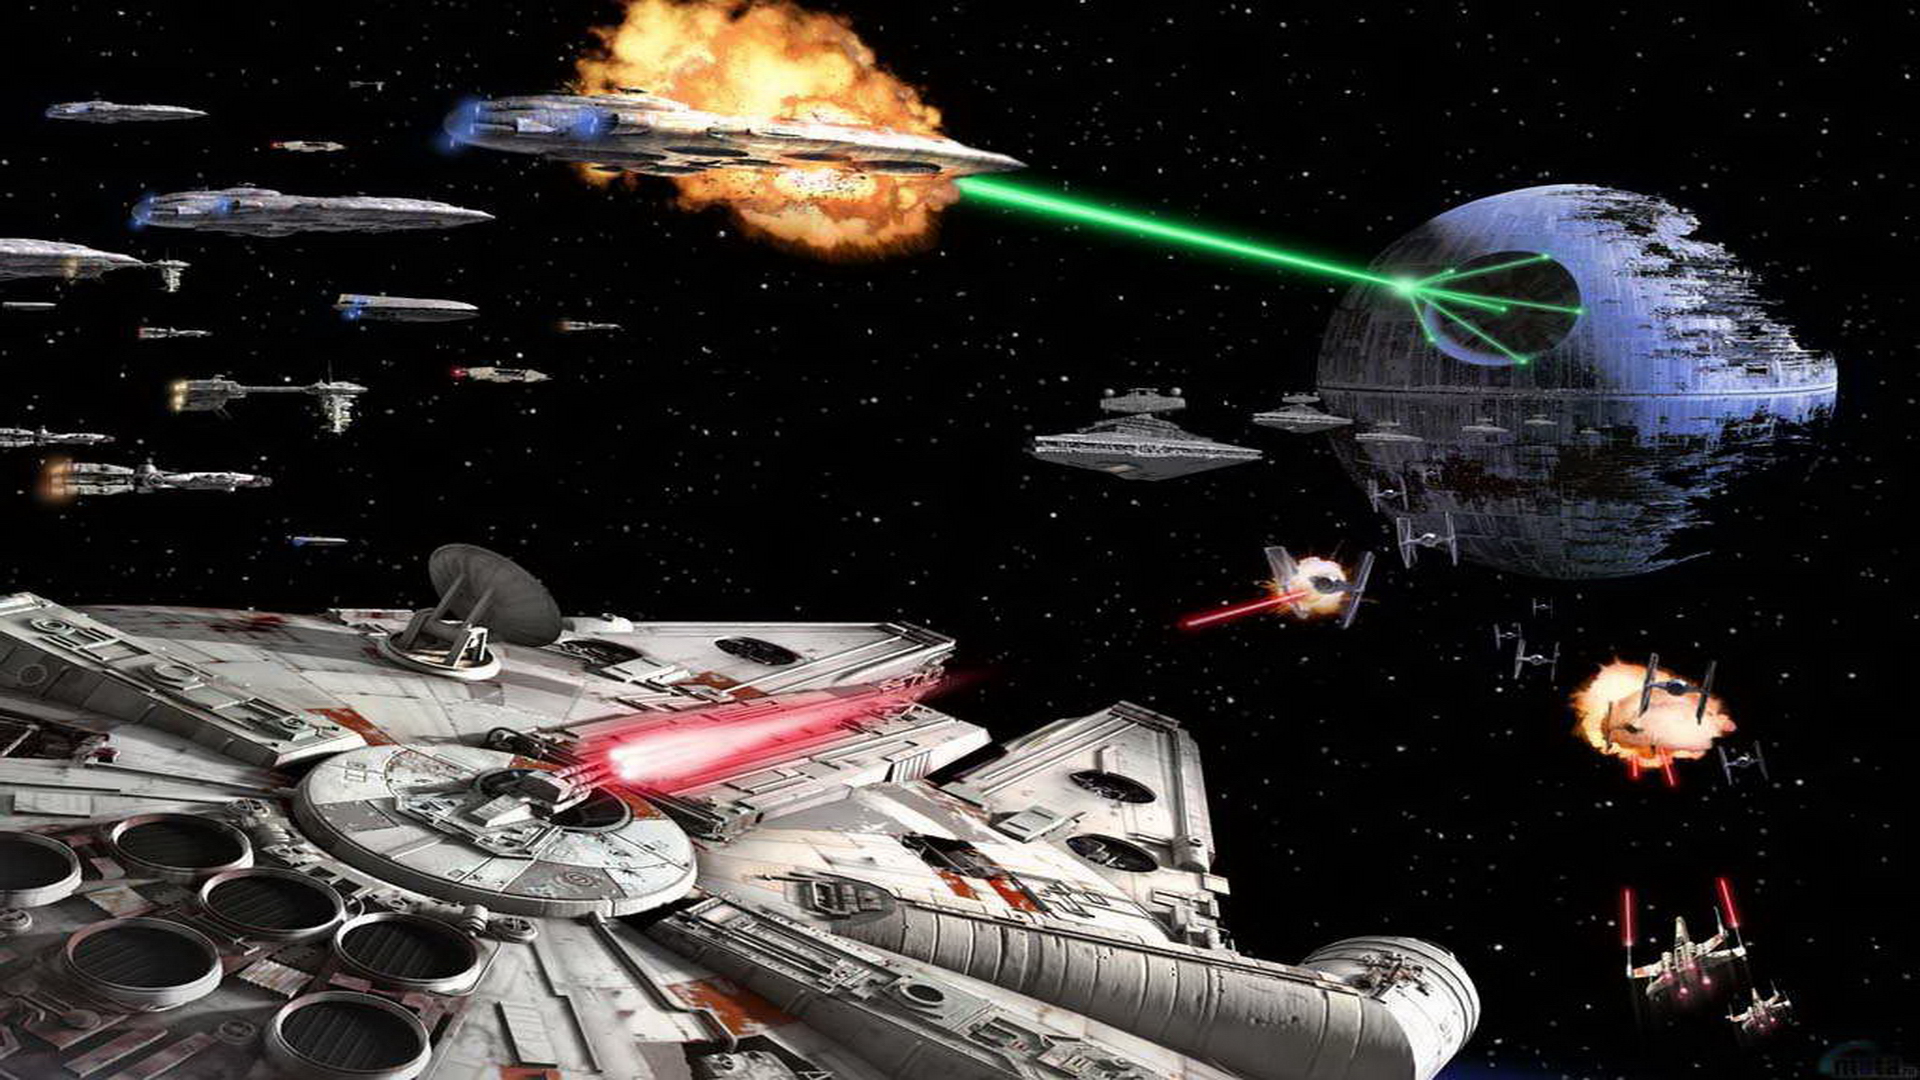 Star Wars Battle Of Endor 13066 Wallpaper - Attacking The Death Star - HD Wallpaper 